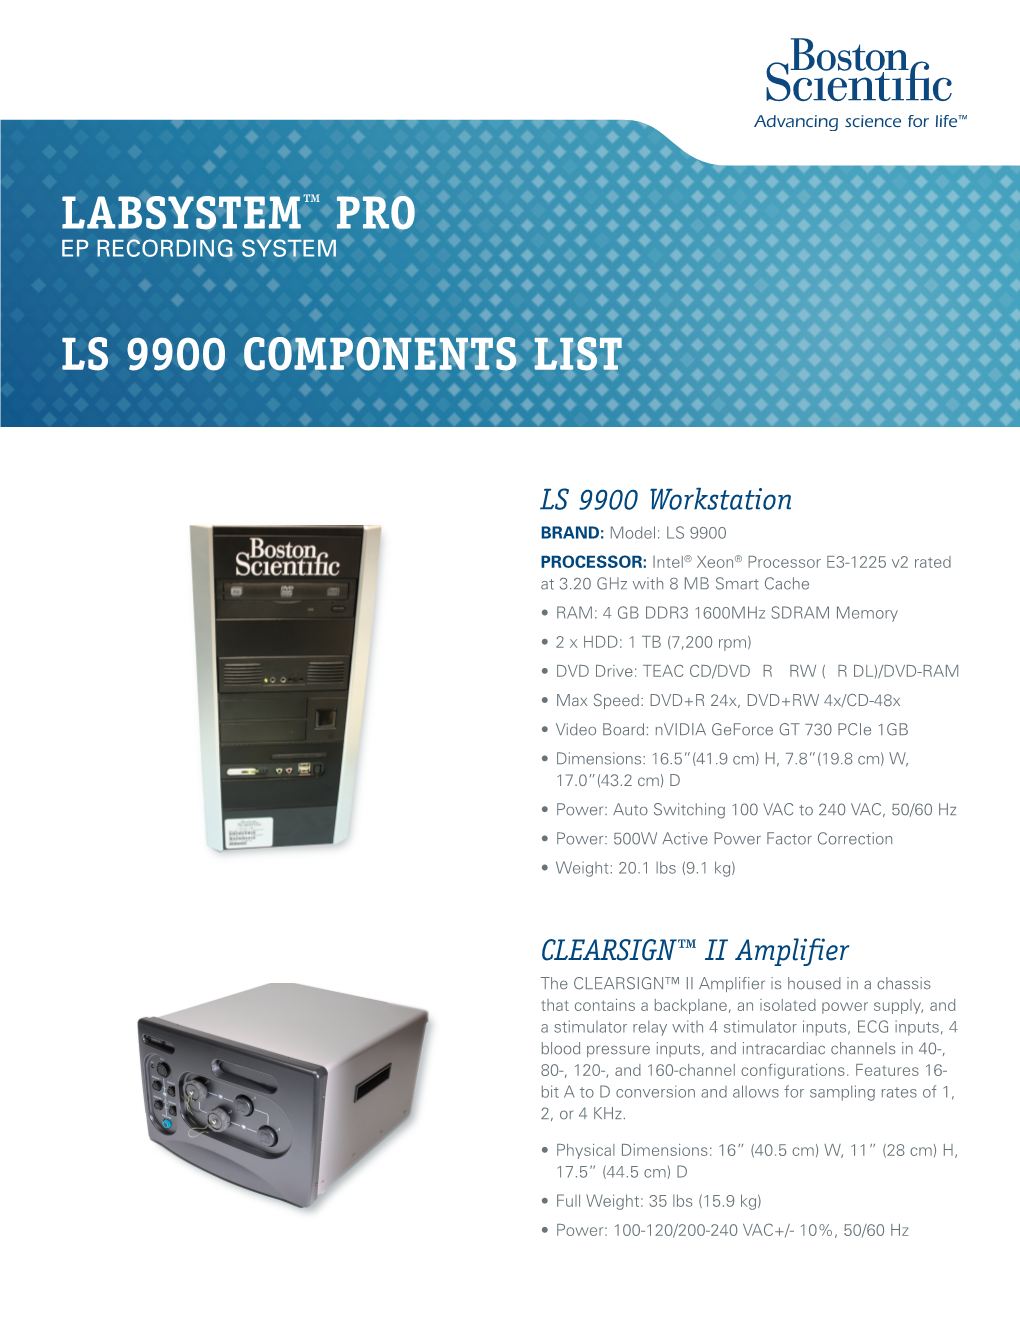 LABSYSTEM PRO LS 9900 Components List